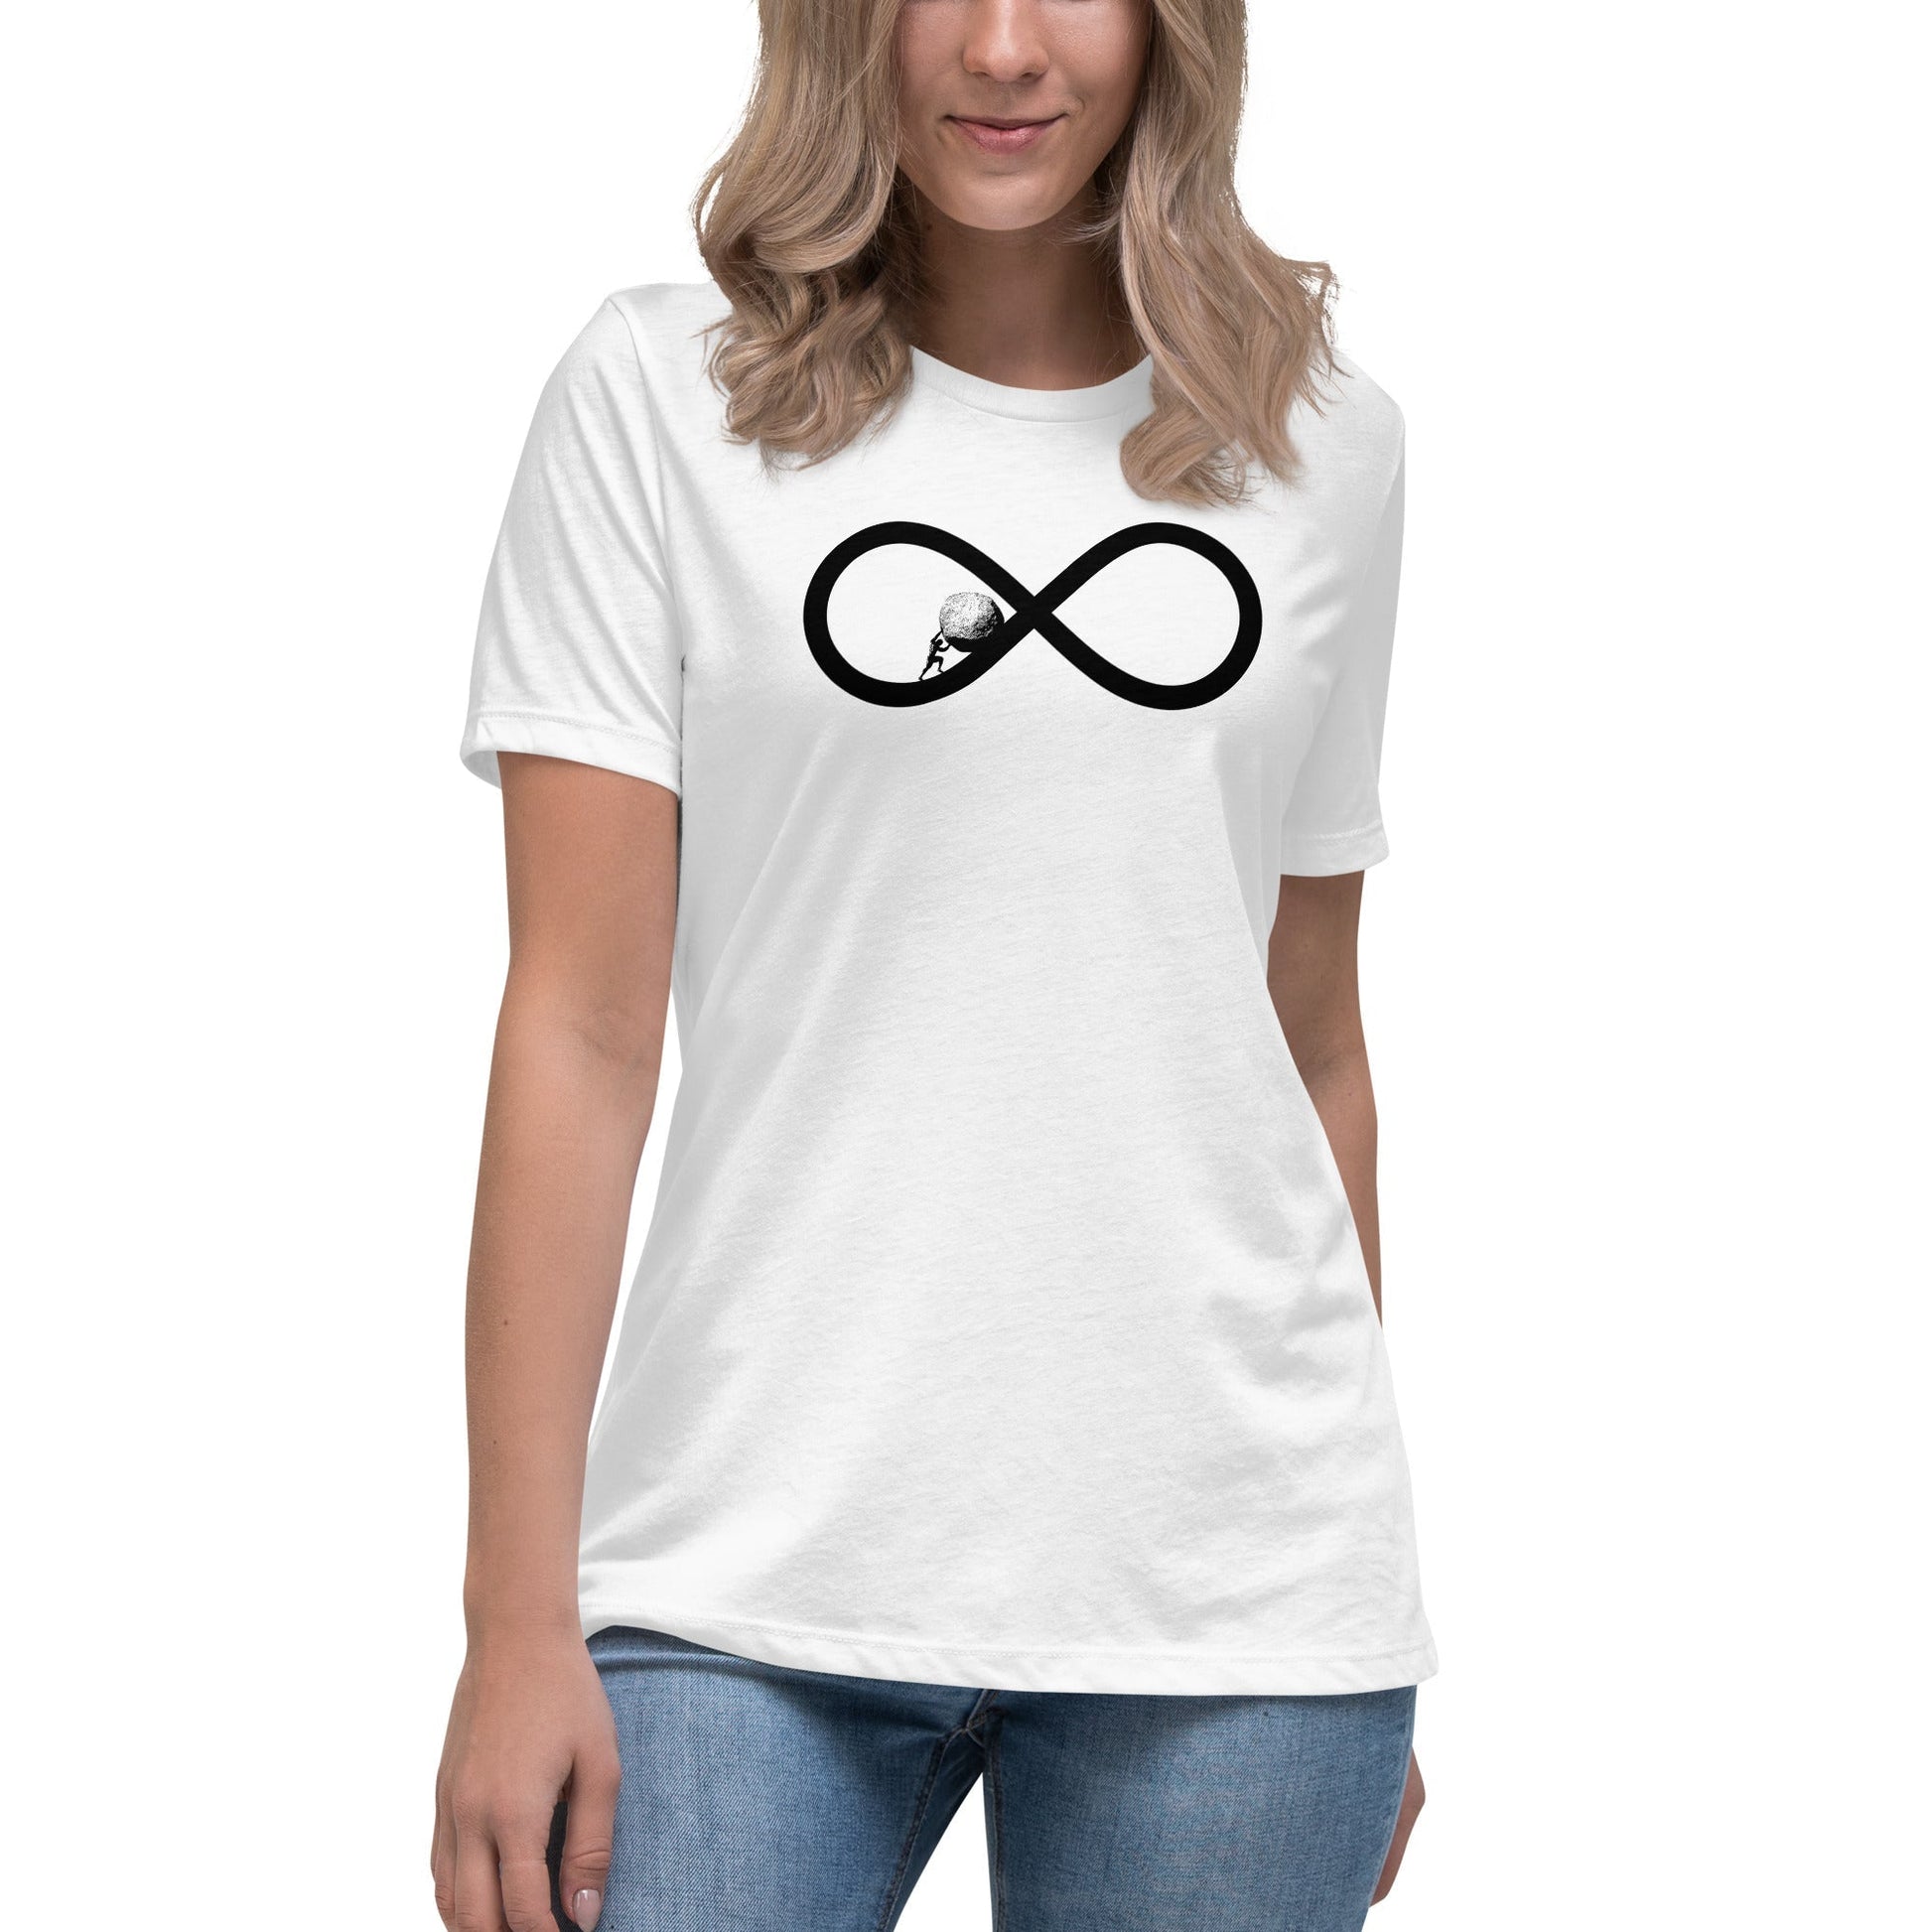 Sisyphus To Infinity - Women's T-Shirt